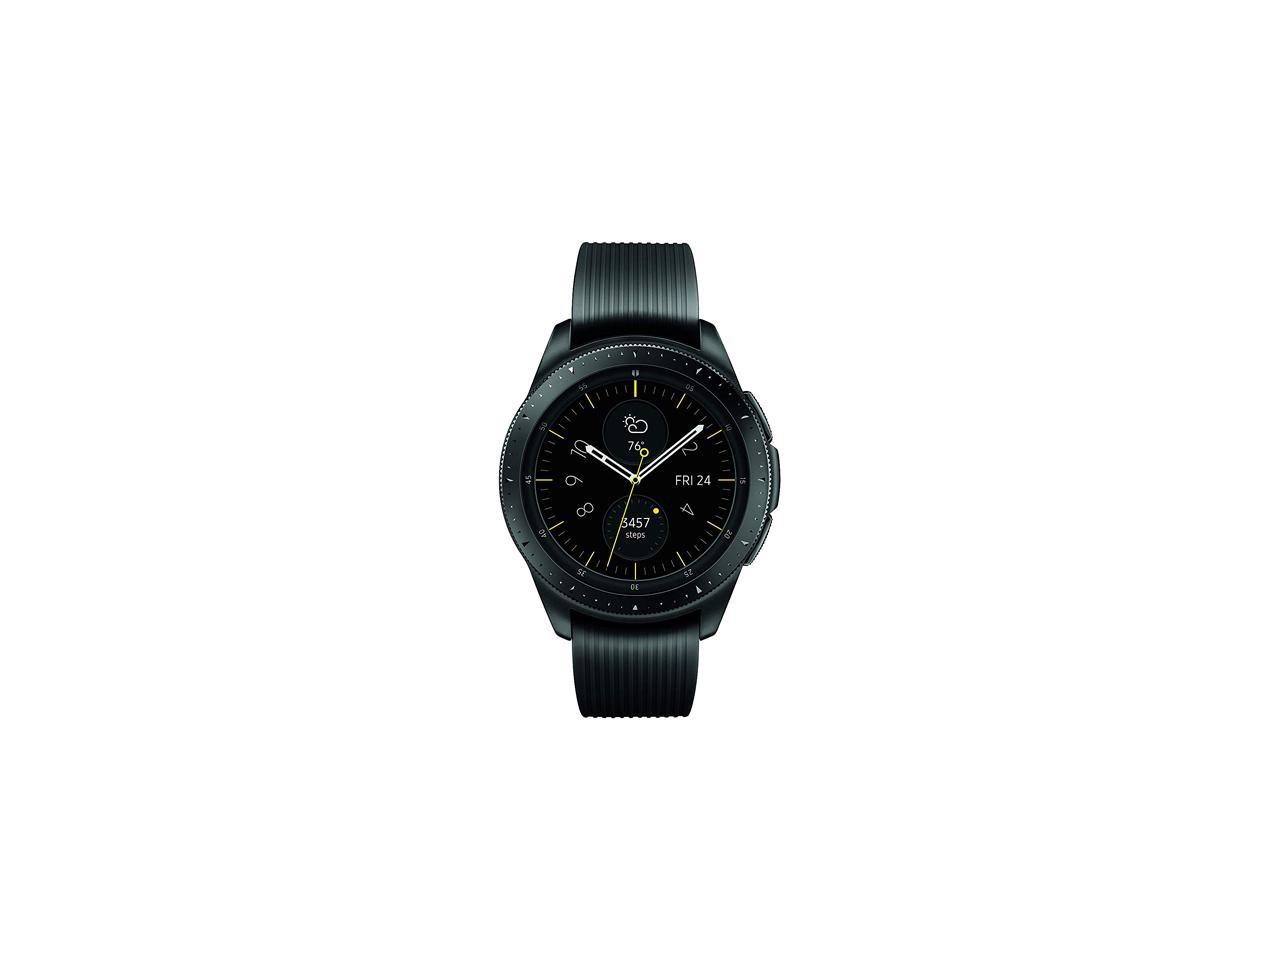 Samsung Galaxy Watch (42mm) Midnight Black - Bluetooth